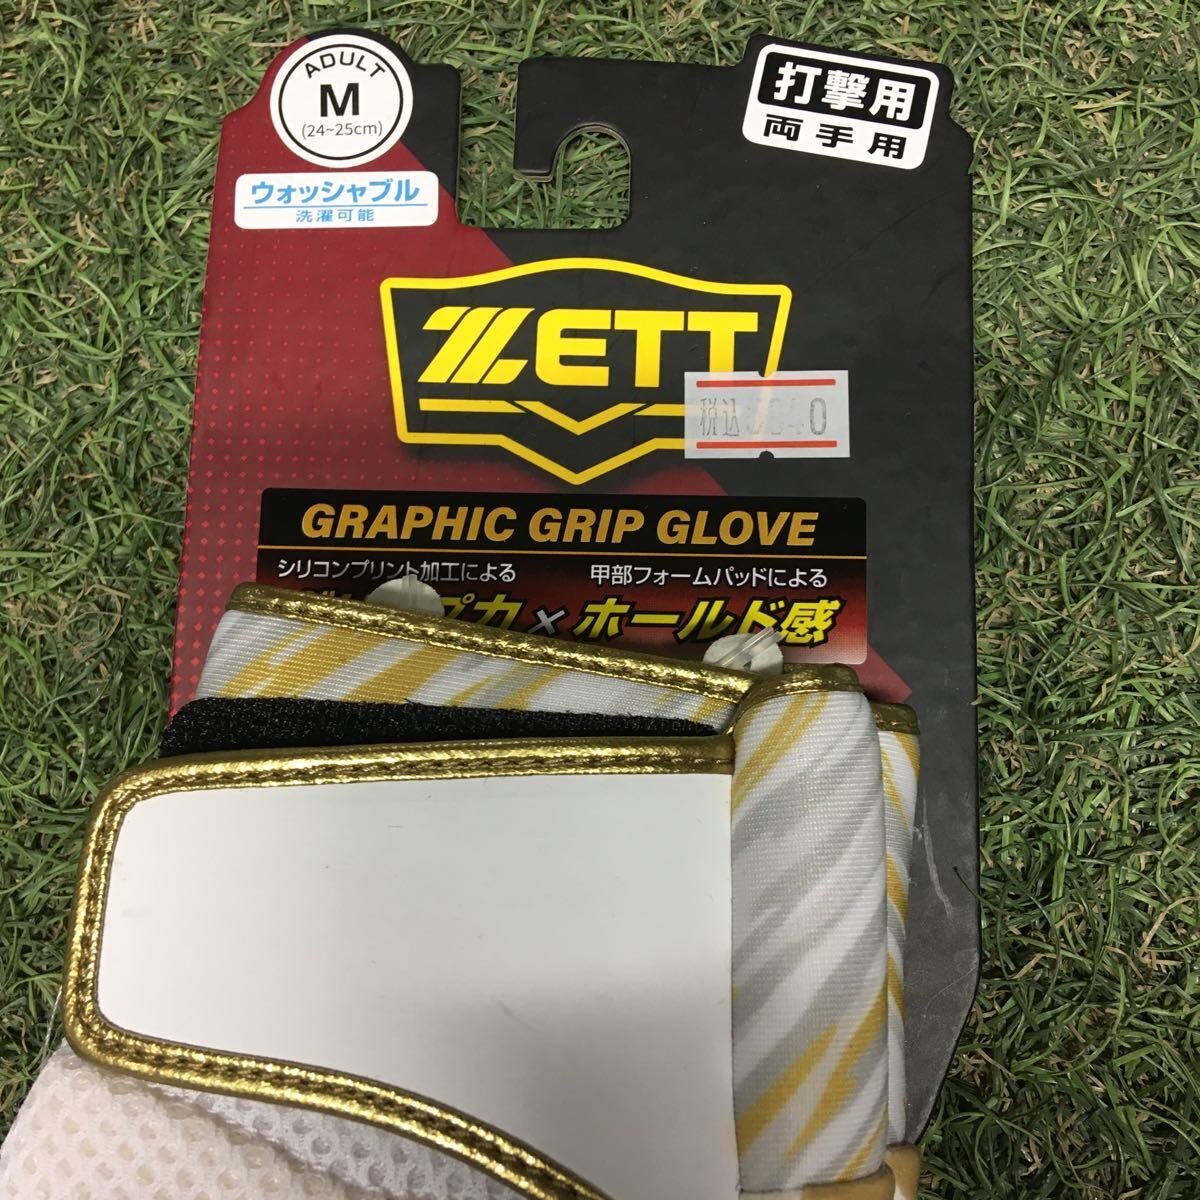 RK458-43 ZETT ゼット BG18513A 一般用 ホワイト×ゴールド 打撃用両手用 Mサイズ(24~25cm) 野球 未使用 展示品 手袋の画像3